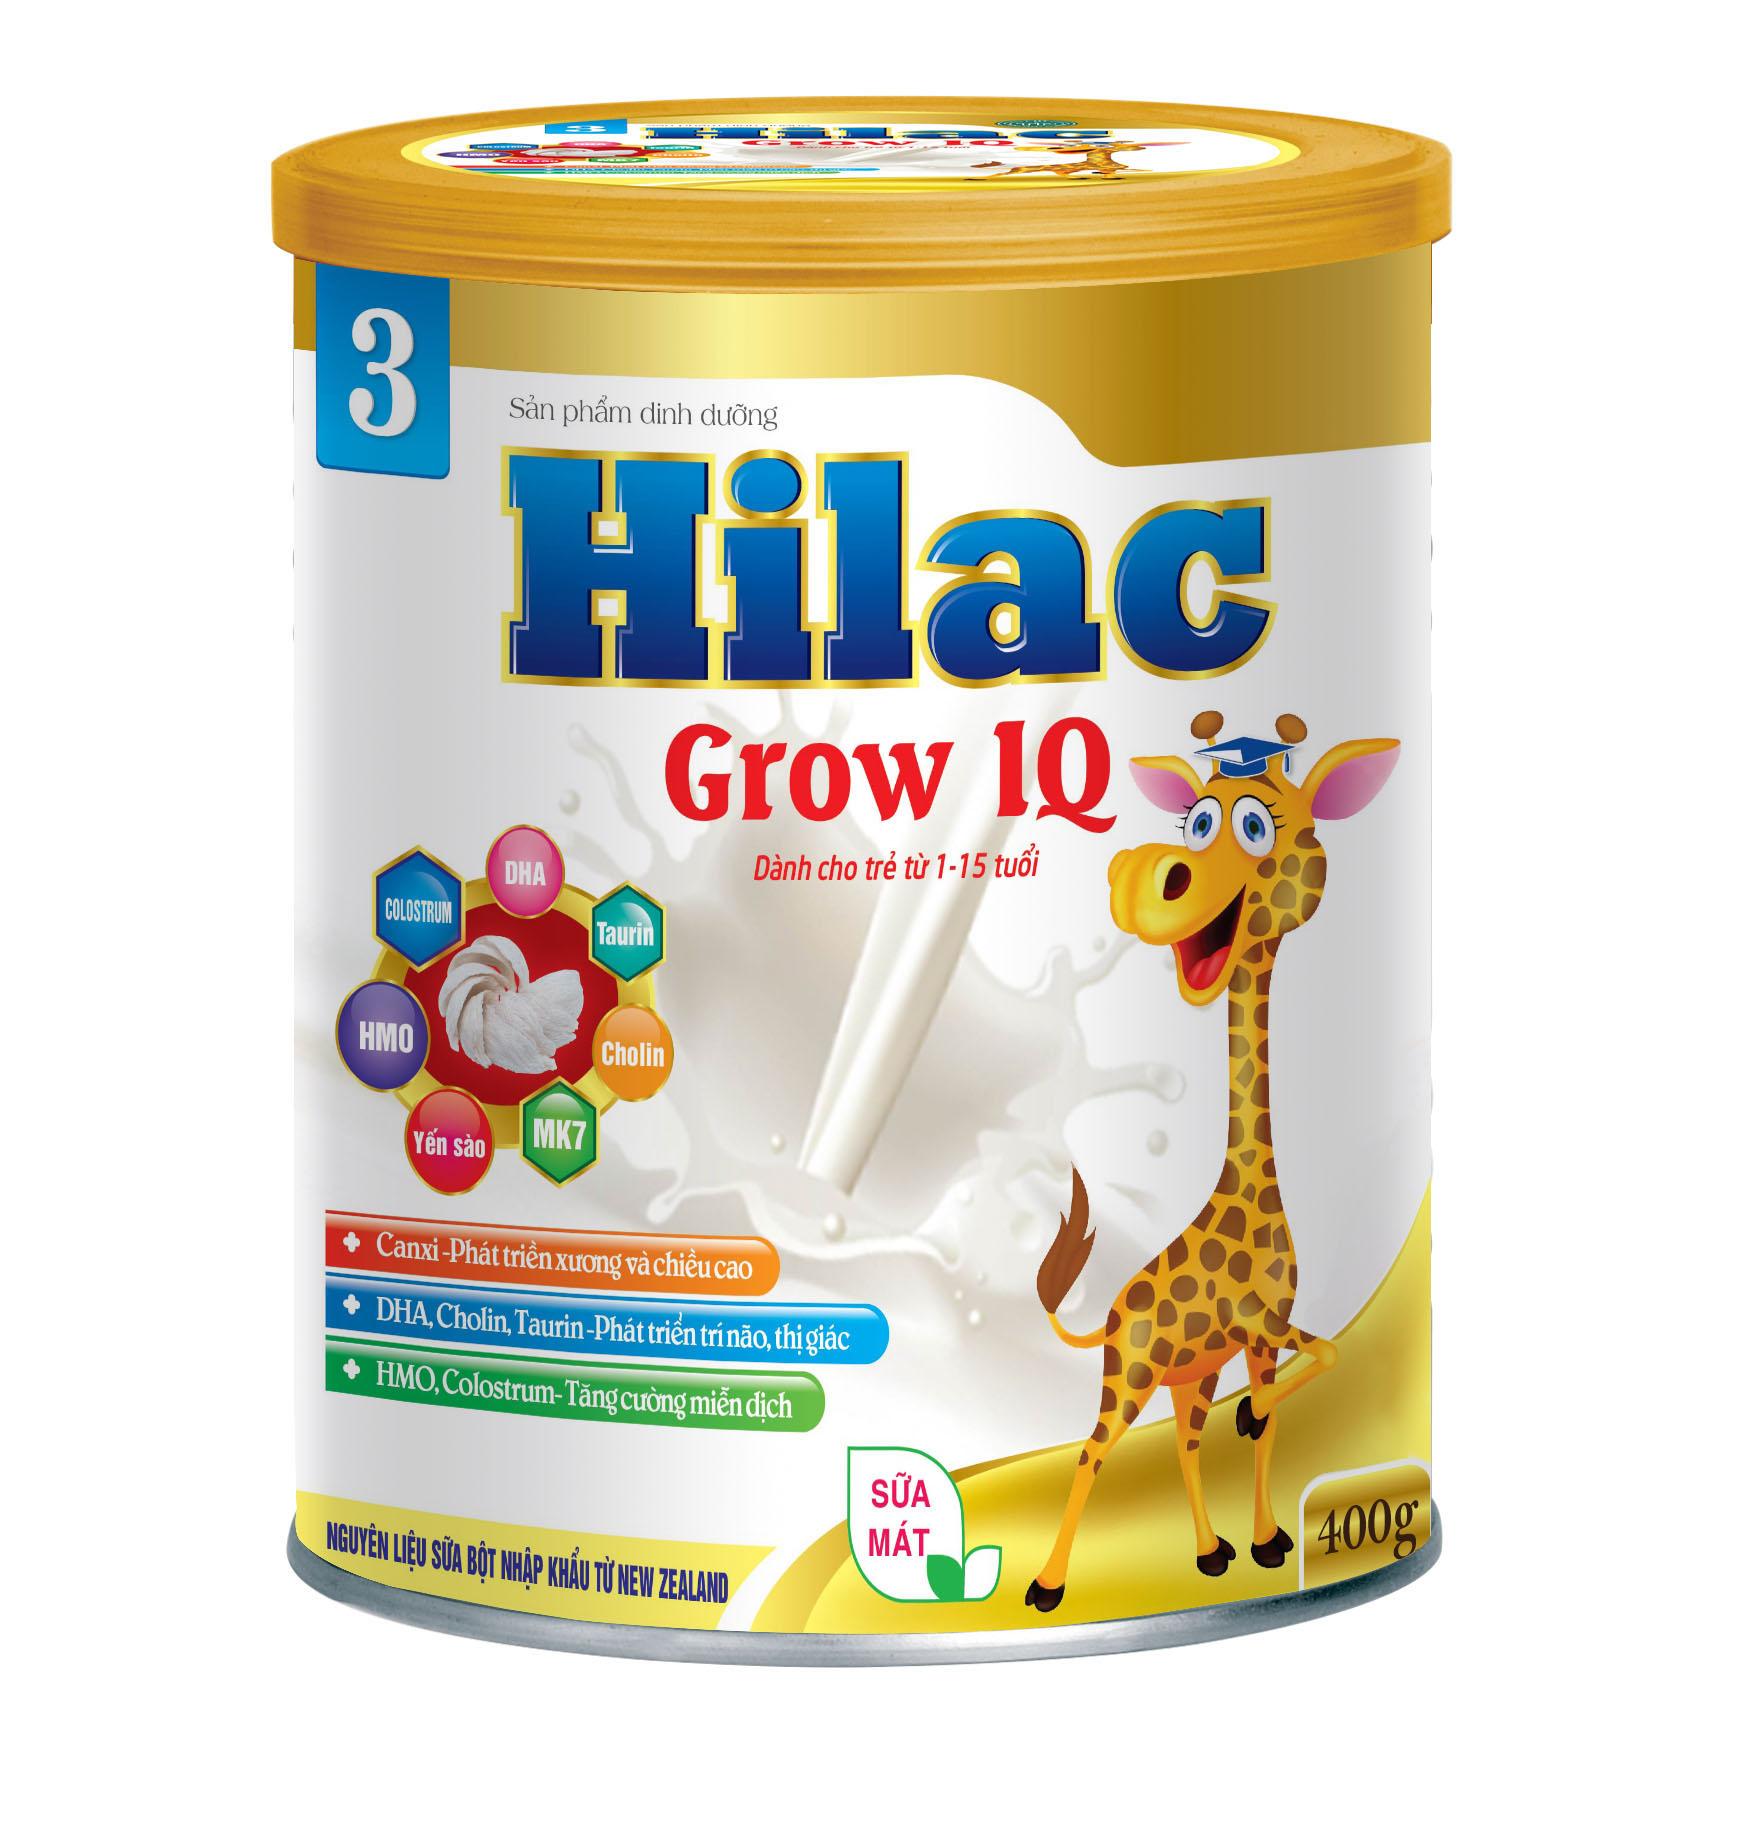 Hilac Grow IQ bé 1-15 tuổi